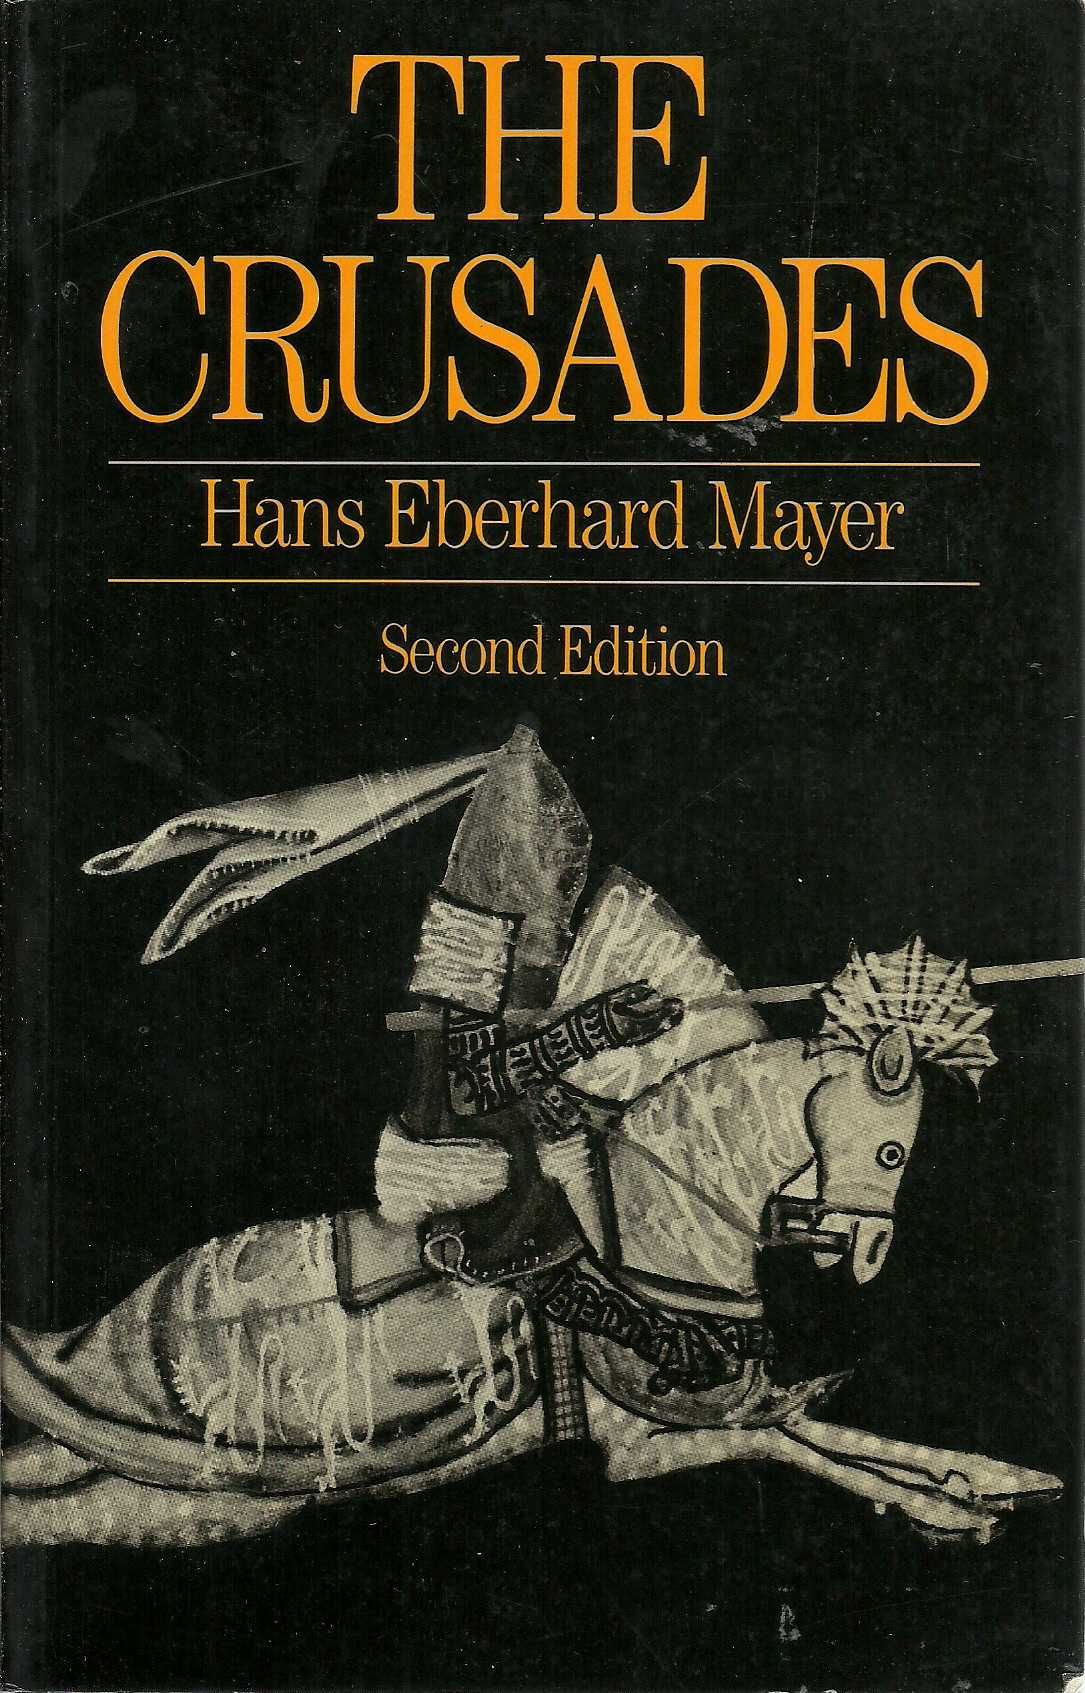 Hans Eberhard Mayer, The Crusades